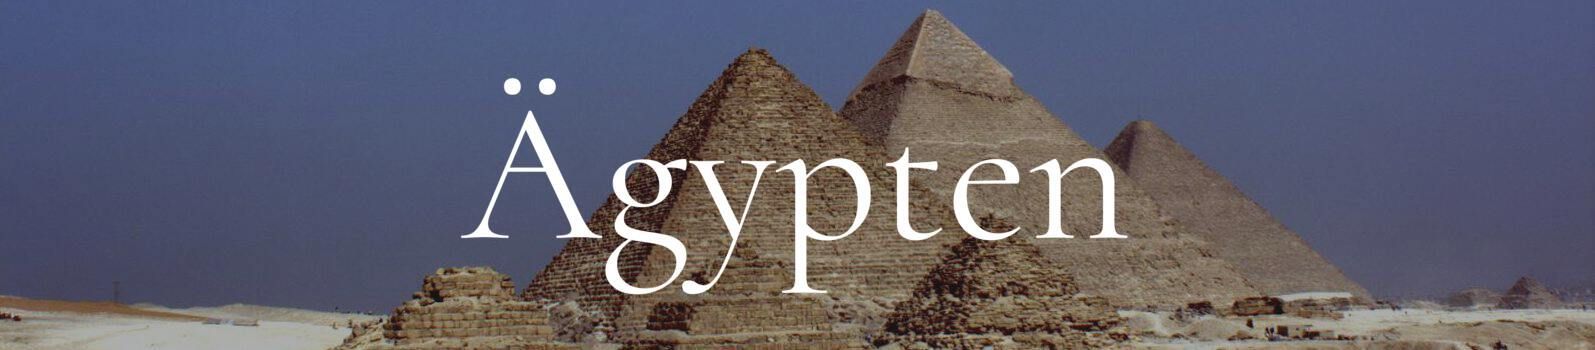 Banner Ã„gypten Pyramiden